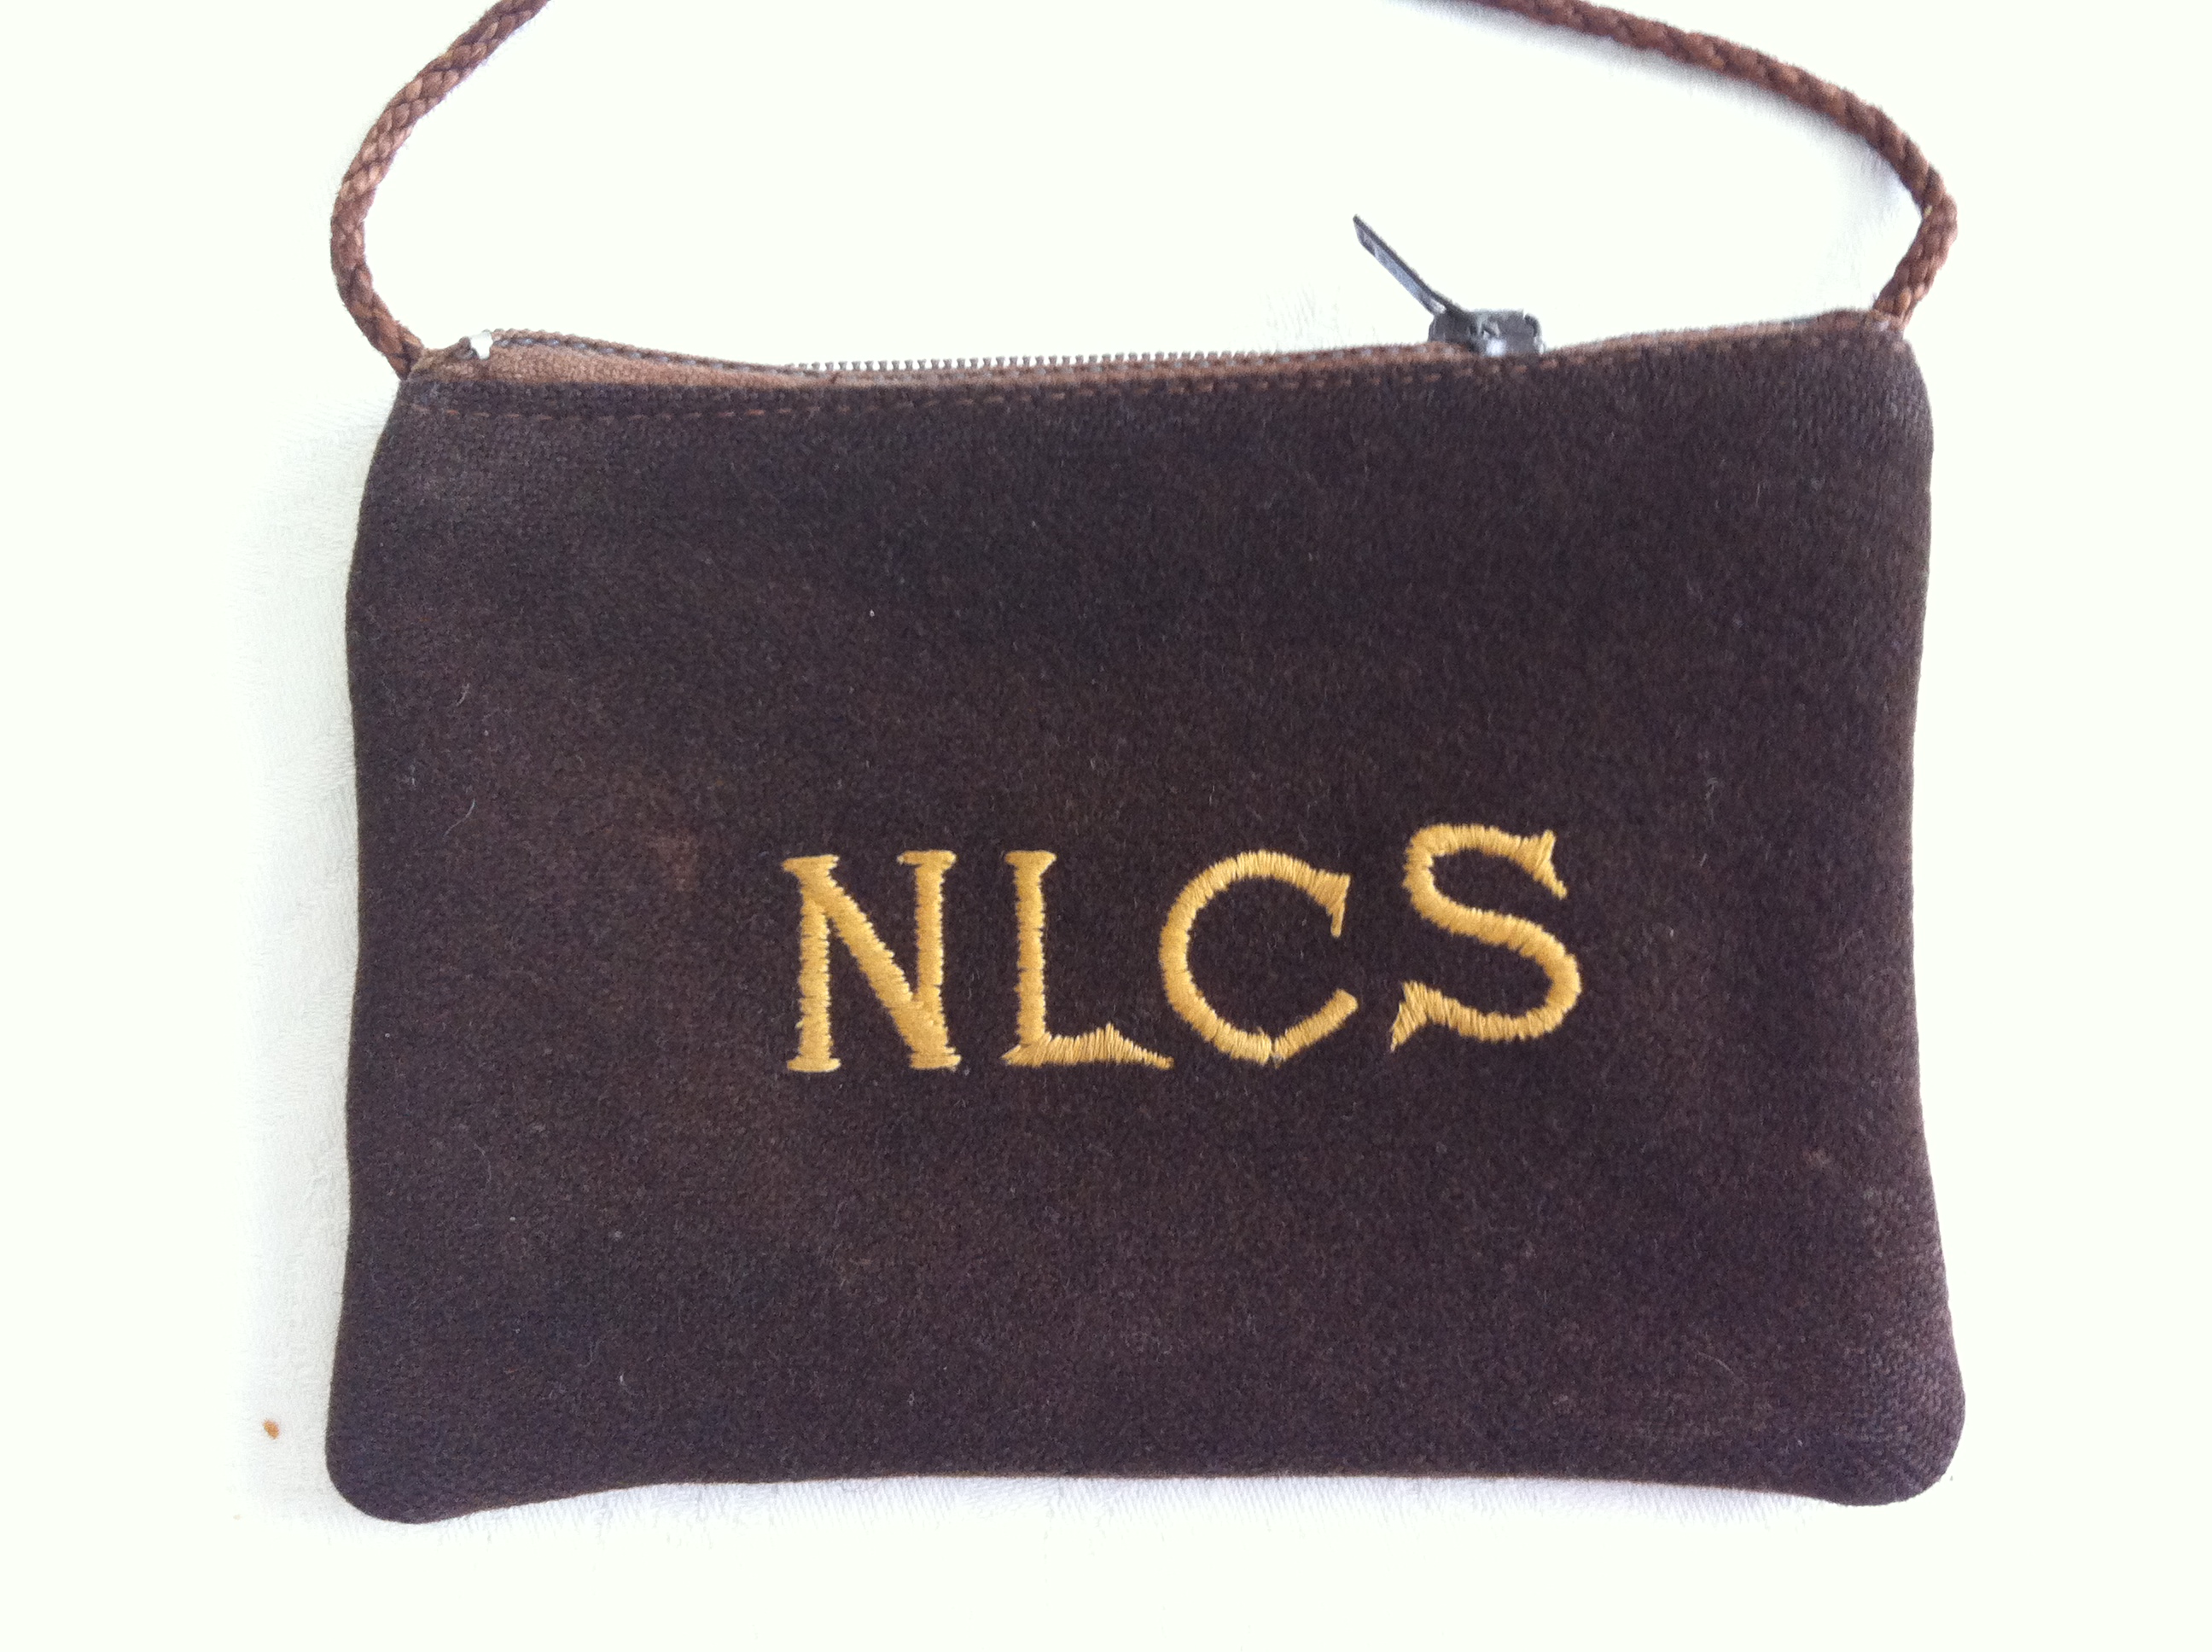 NLCS purse